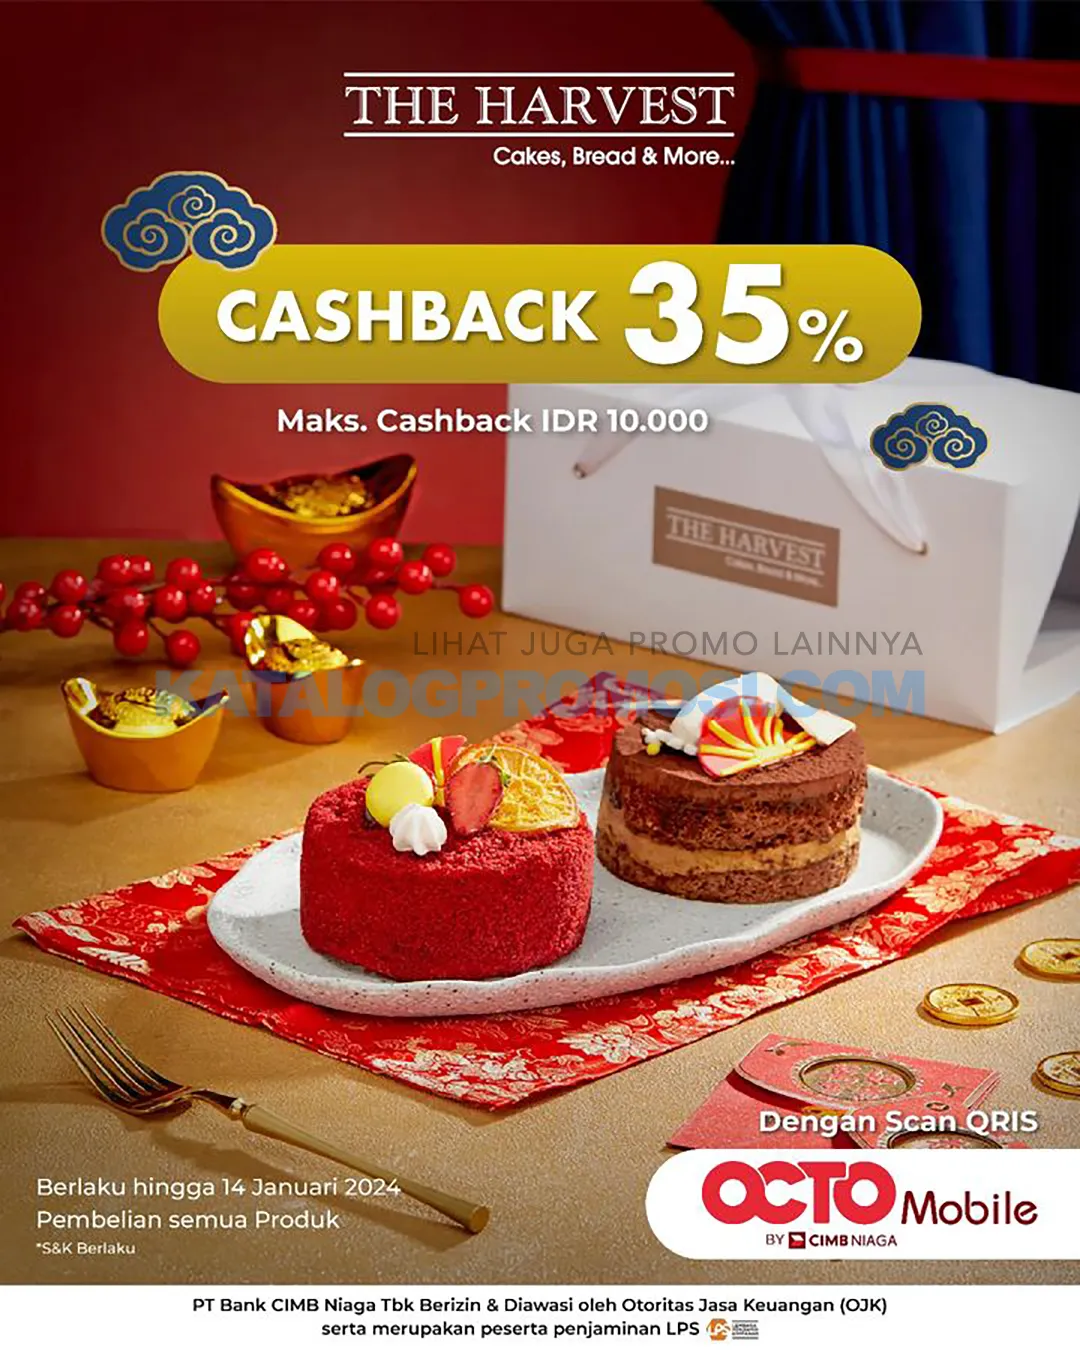 Promo THE HARVEST Cashback 35% dengan QR OCTO Mobile berlaku sd. tanggal 14 Januari 2024